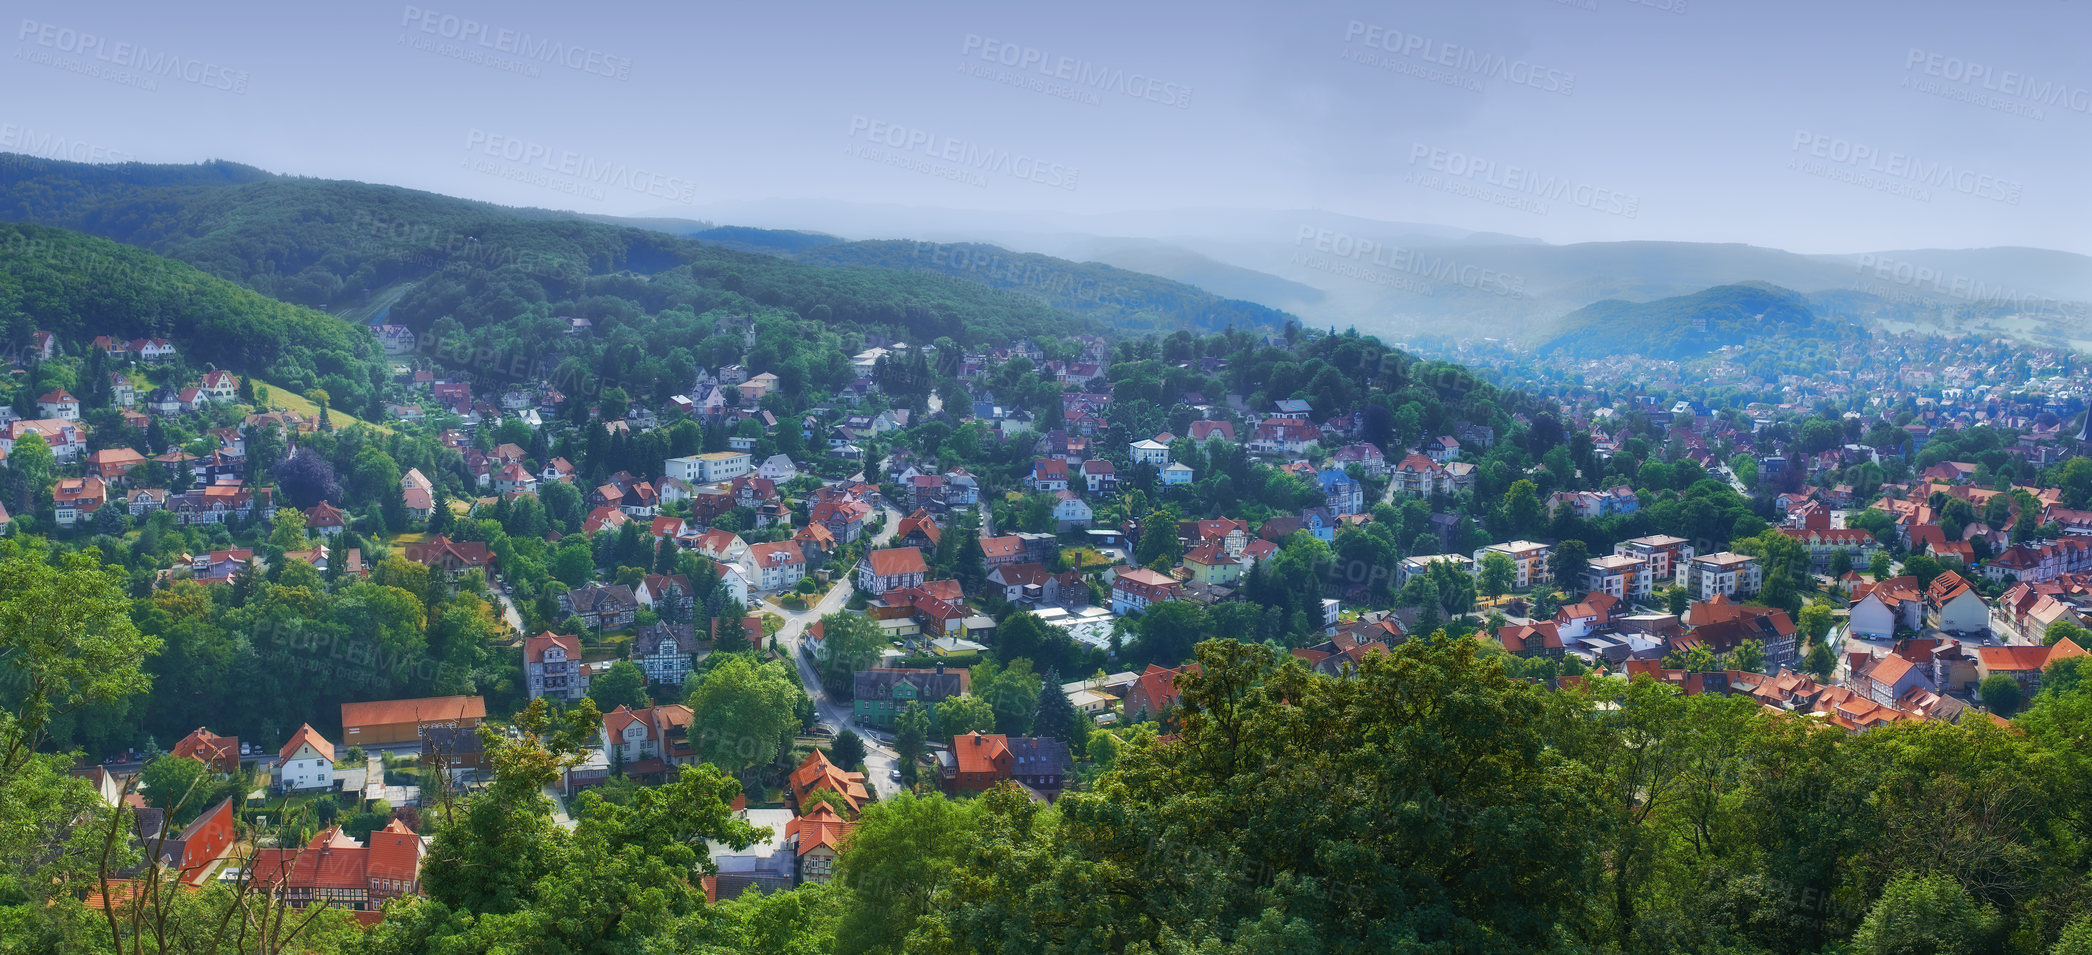 Buy stock photo A scenic village in Harz, Germany